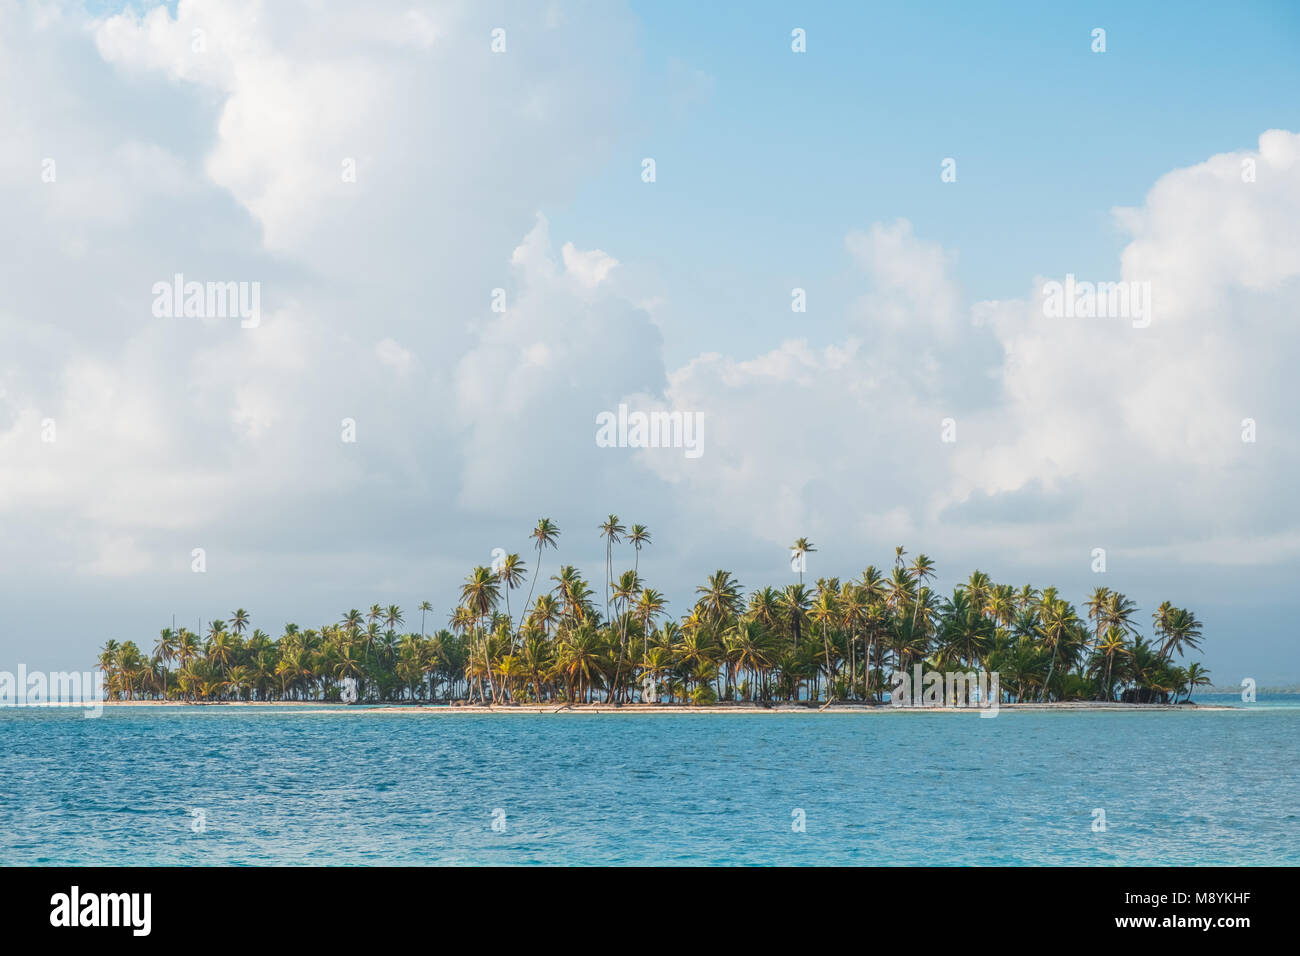 Insel, Strand und Palmen - San Blas Inseln - Karibik Insel im Meer mit malerischen bewölkter Himmel isoliert - Paradise Island, Guna Yala, Panama Stockfoto